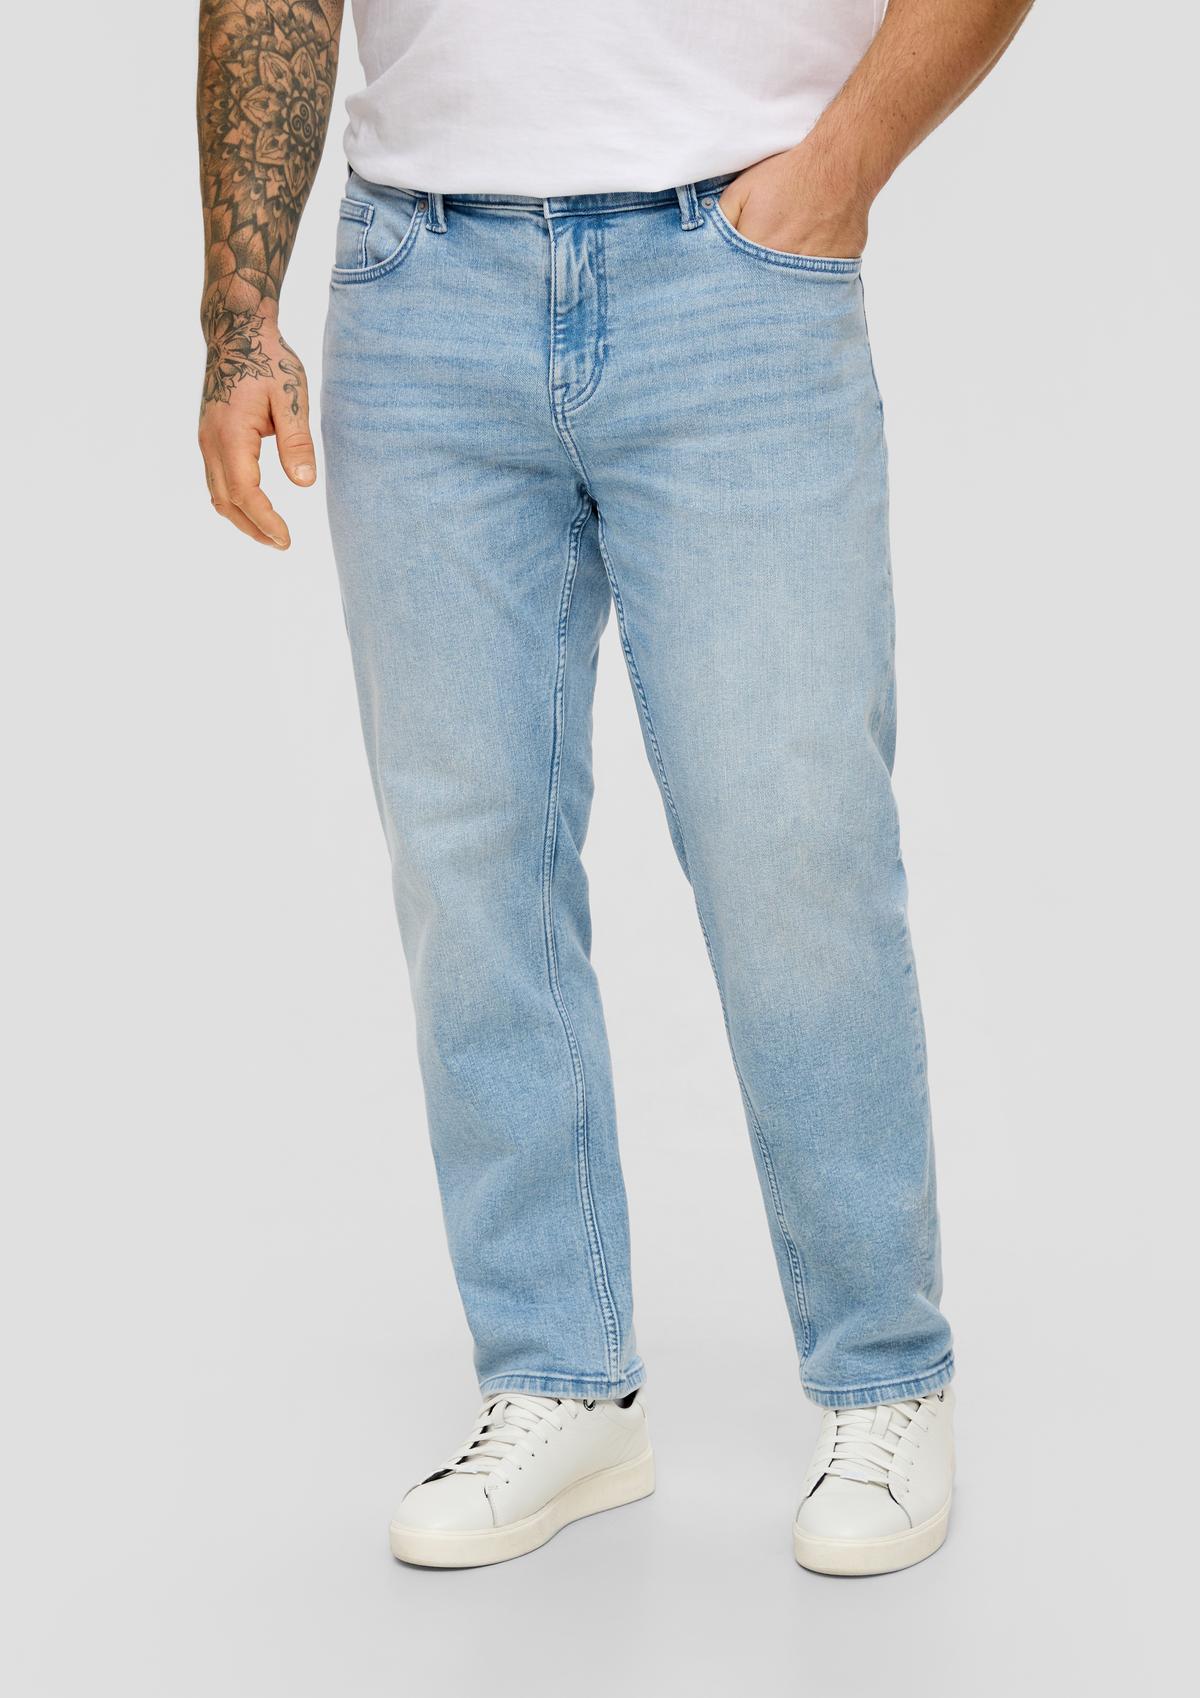 Loose Fit Jeans for Men